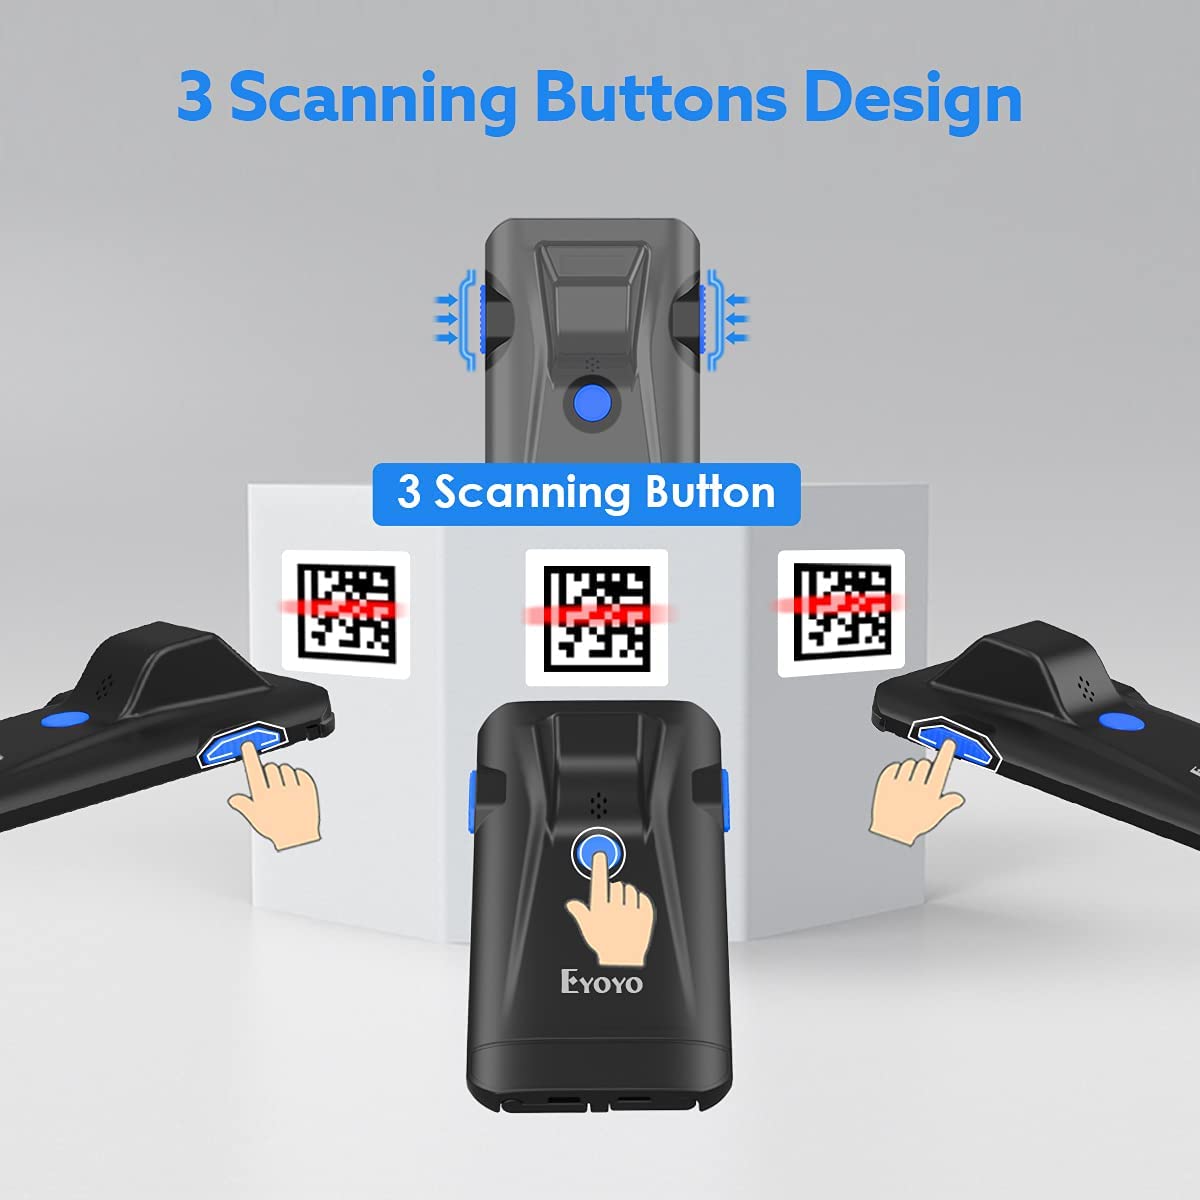 Custom Button Clips - 1